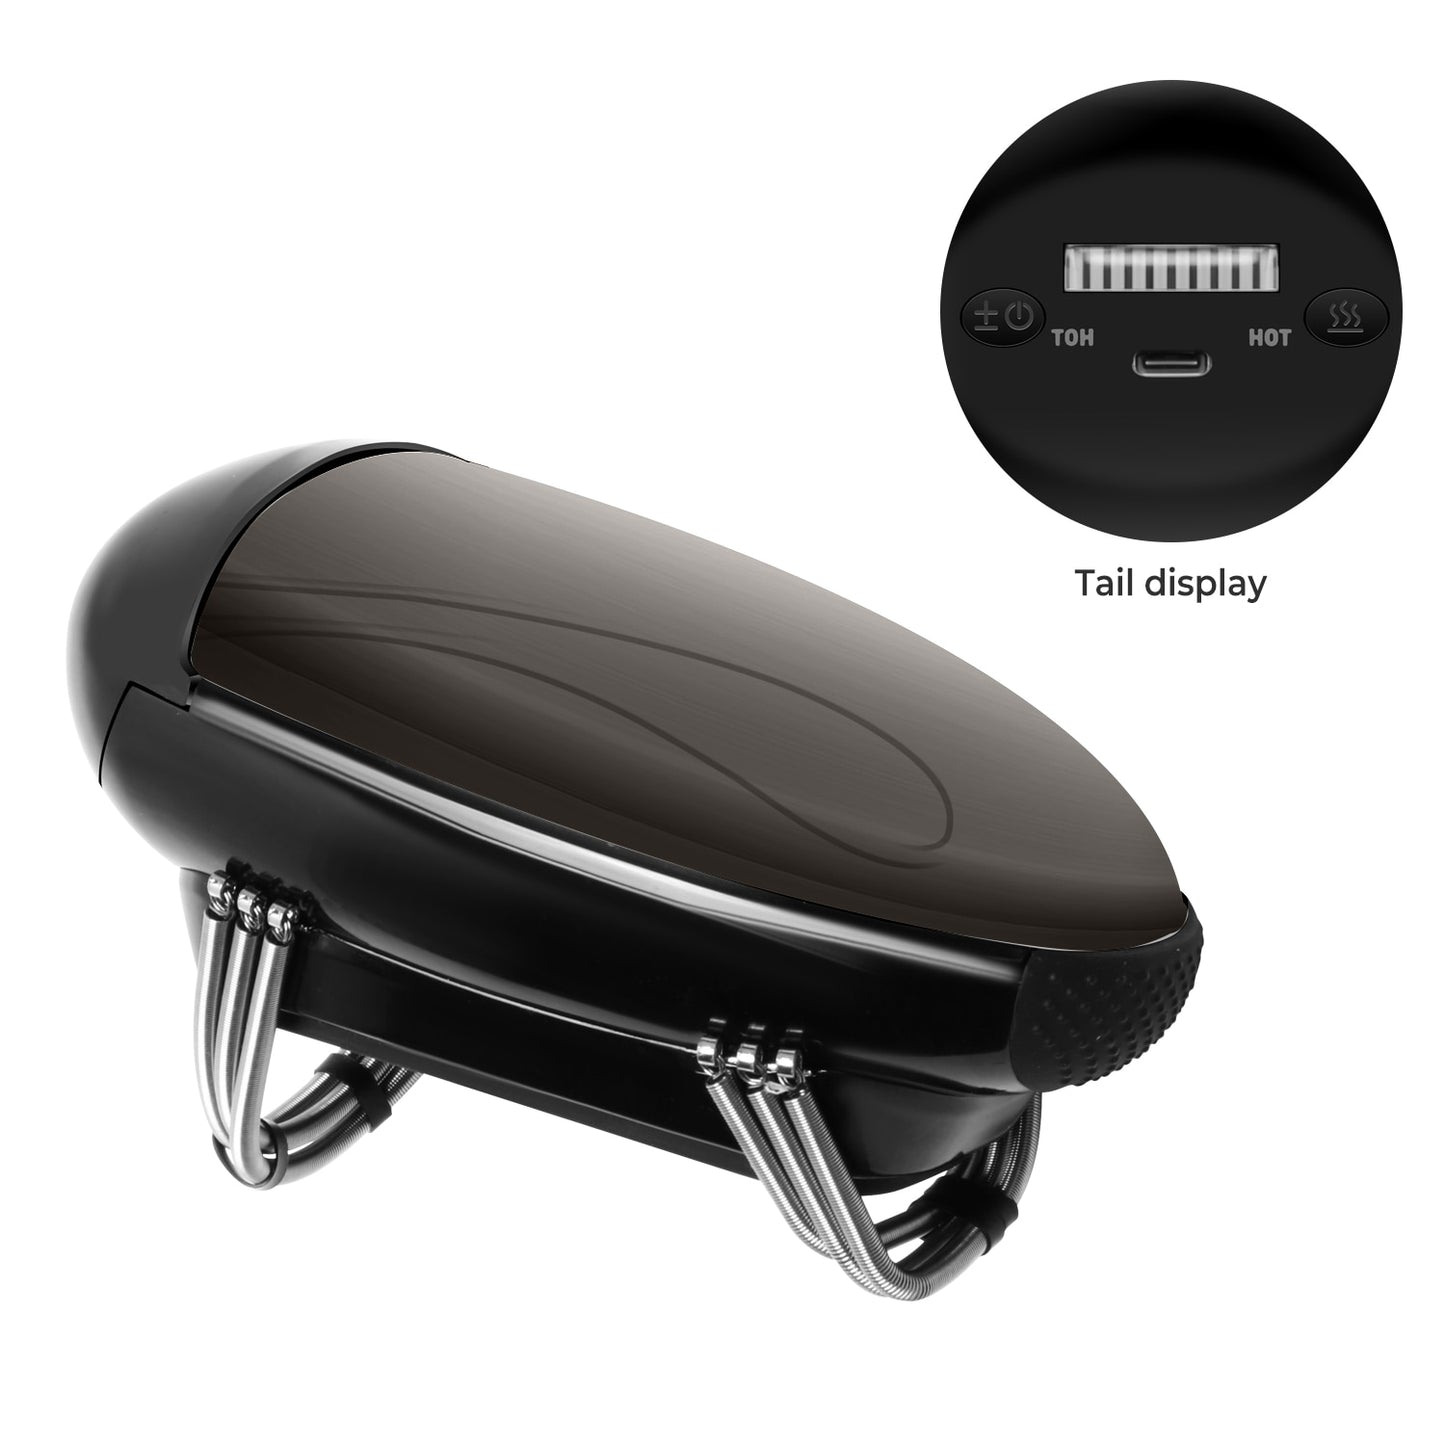 Vibefx Barberology Massager Cordless Electric Vibrator/Metal Handheld Heat Massager